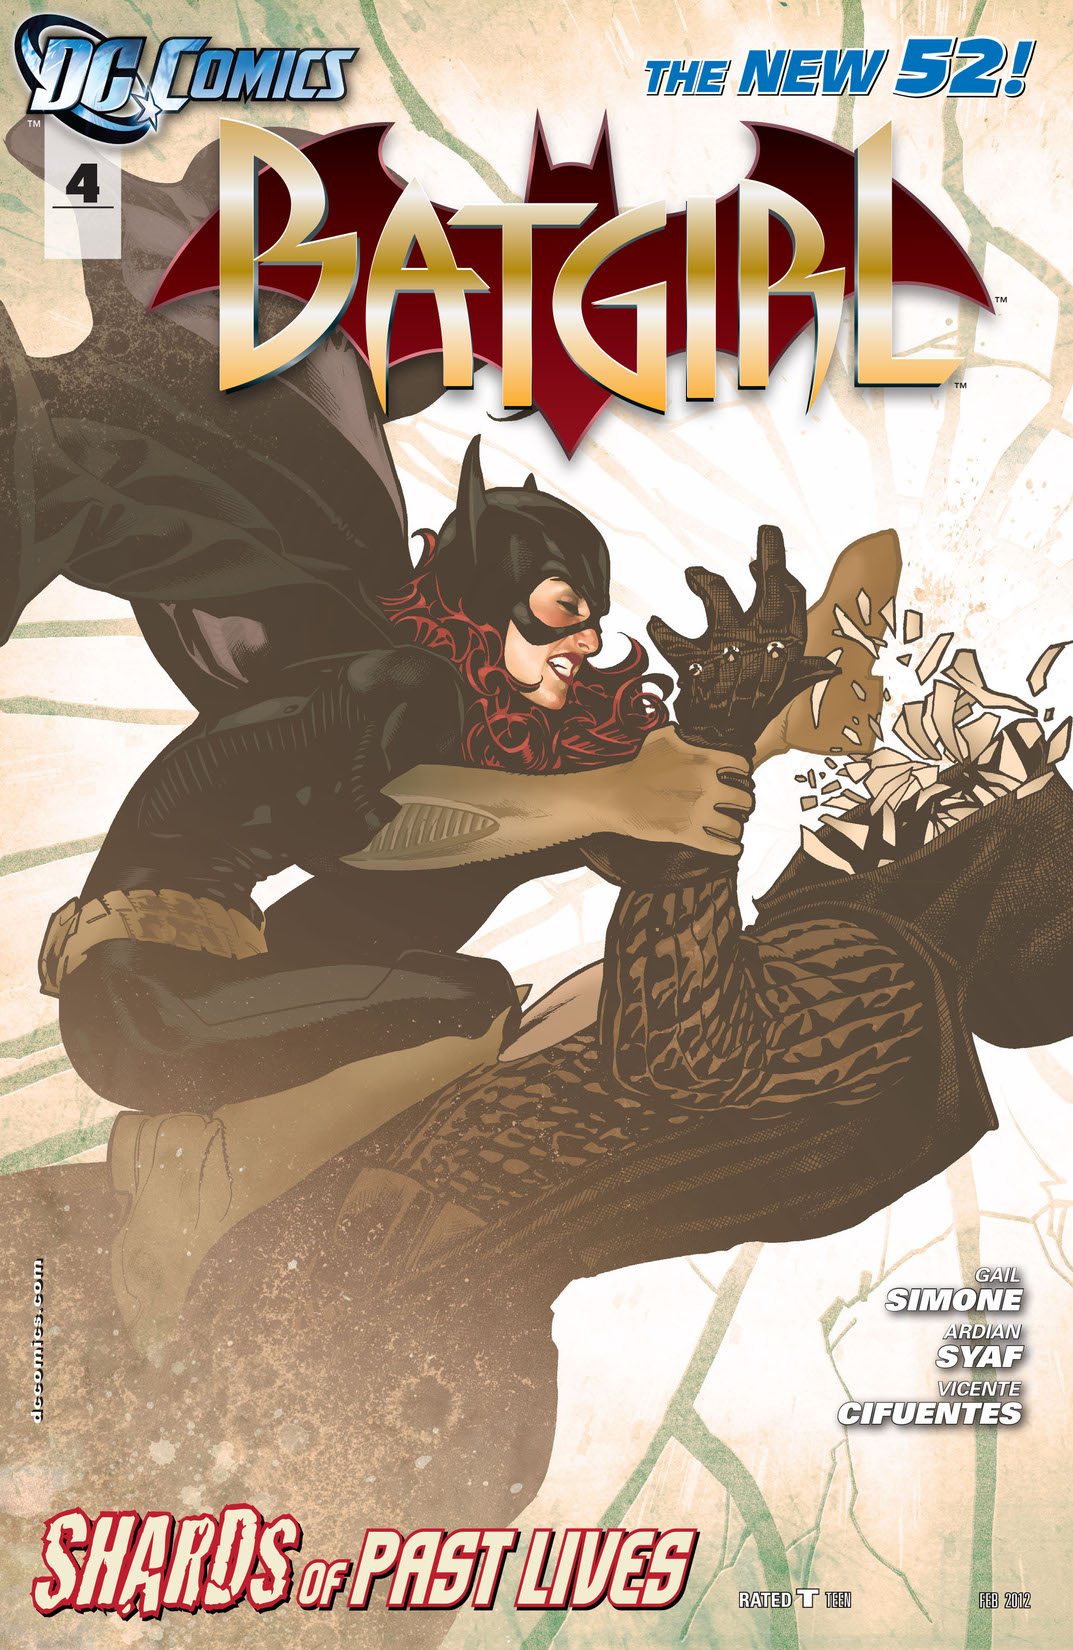 Batgirl (2011-) #4 preview images